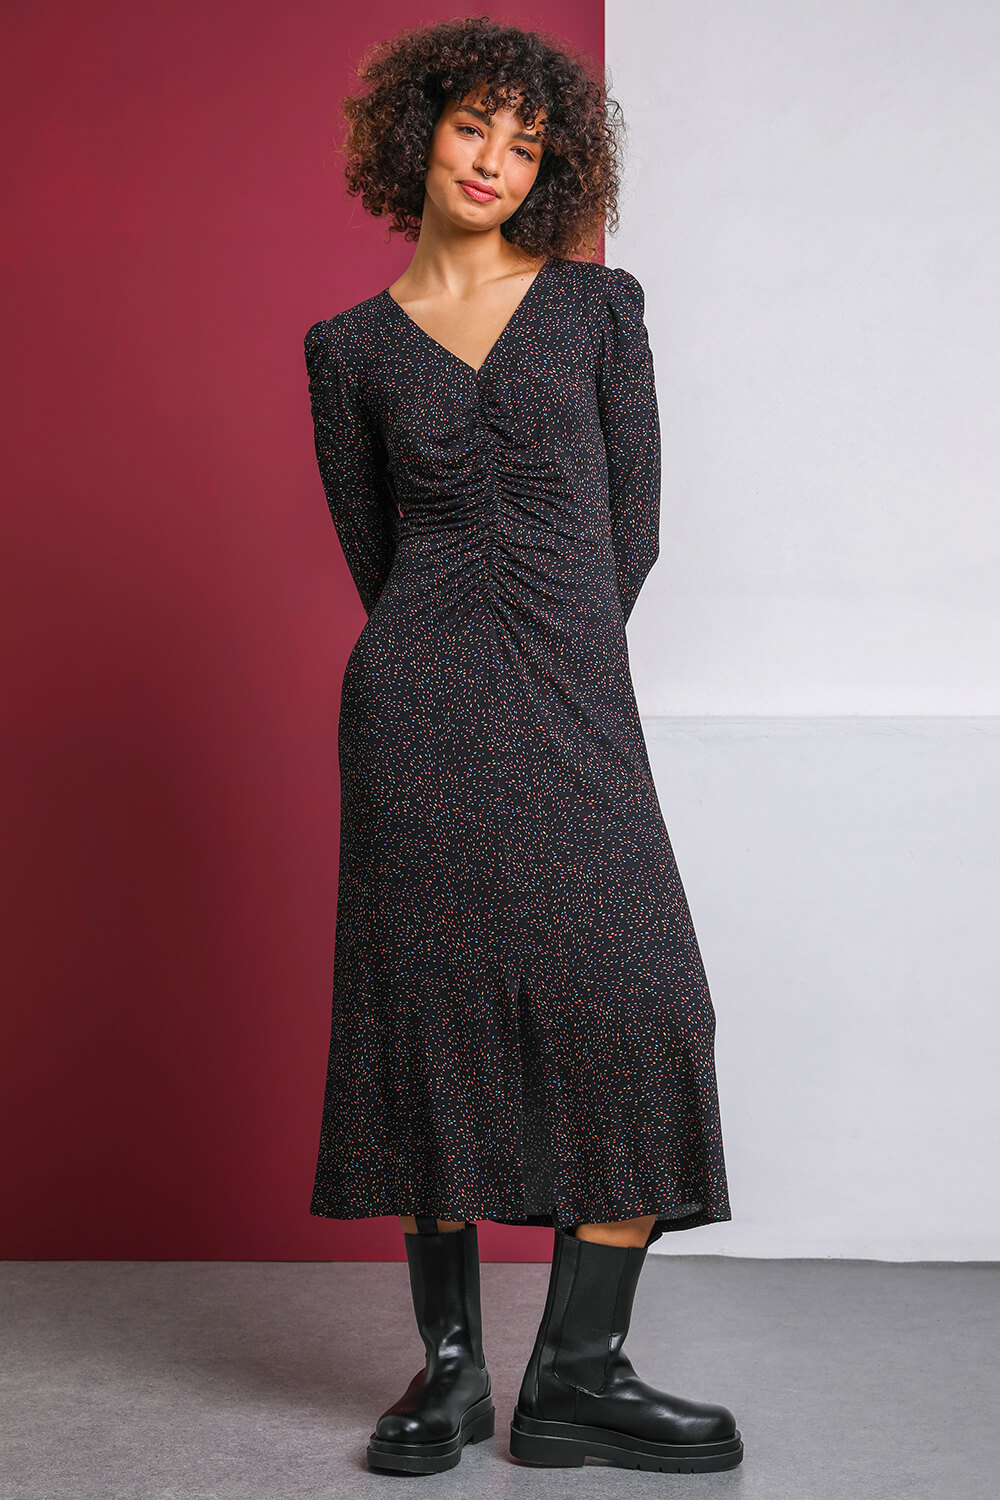 Black Spot Print Ruched Front Dress, Image 4 of 5